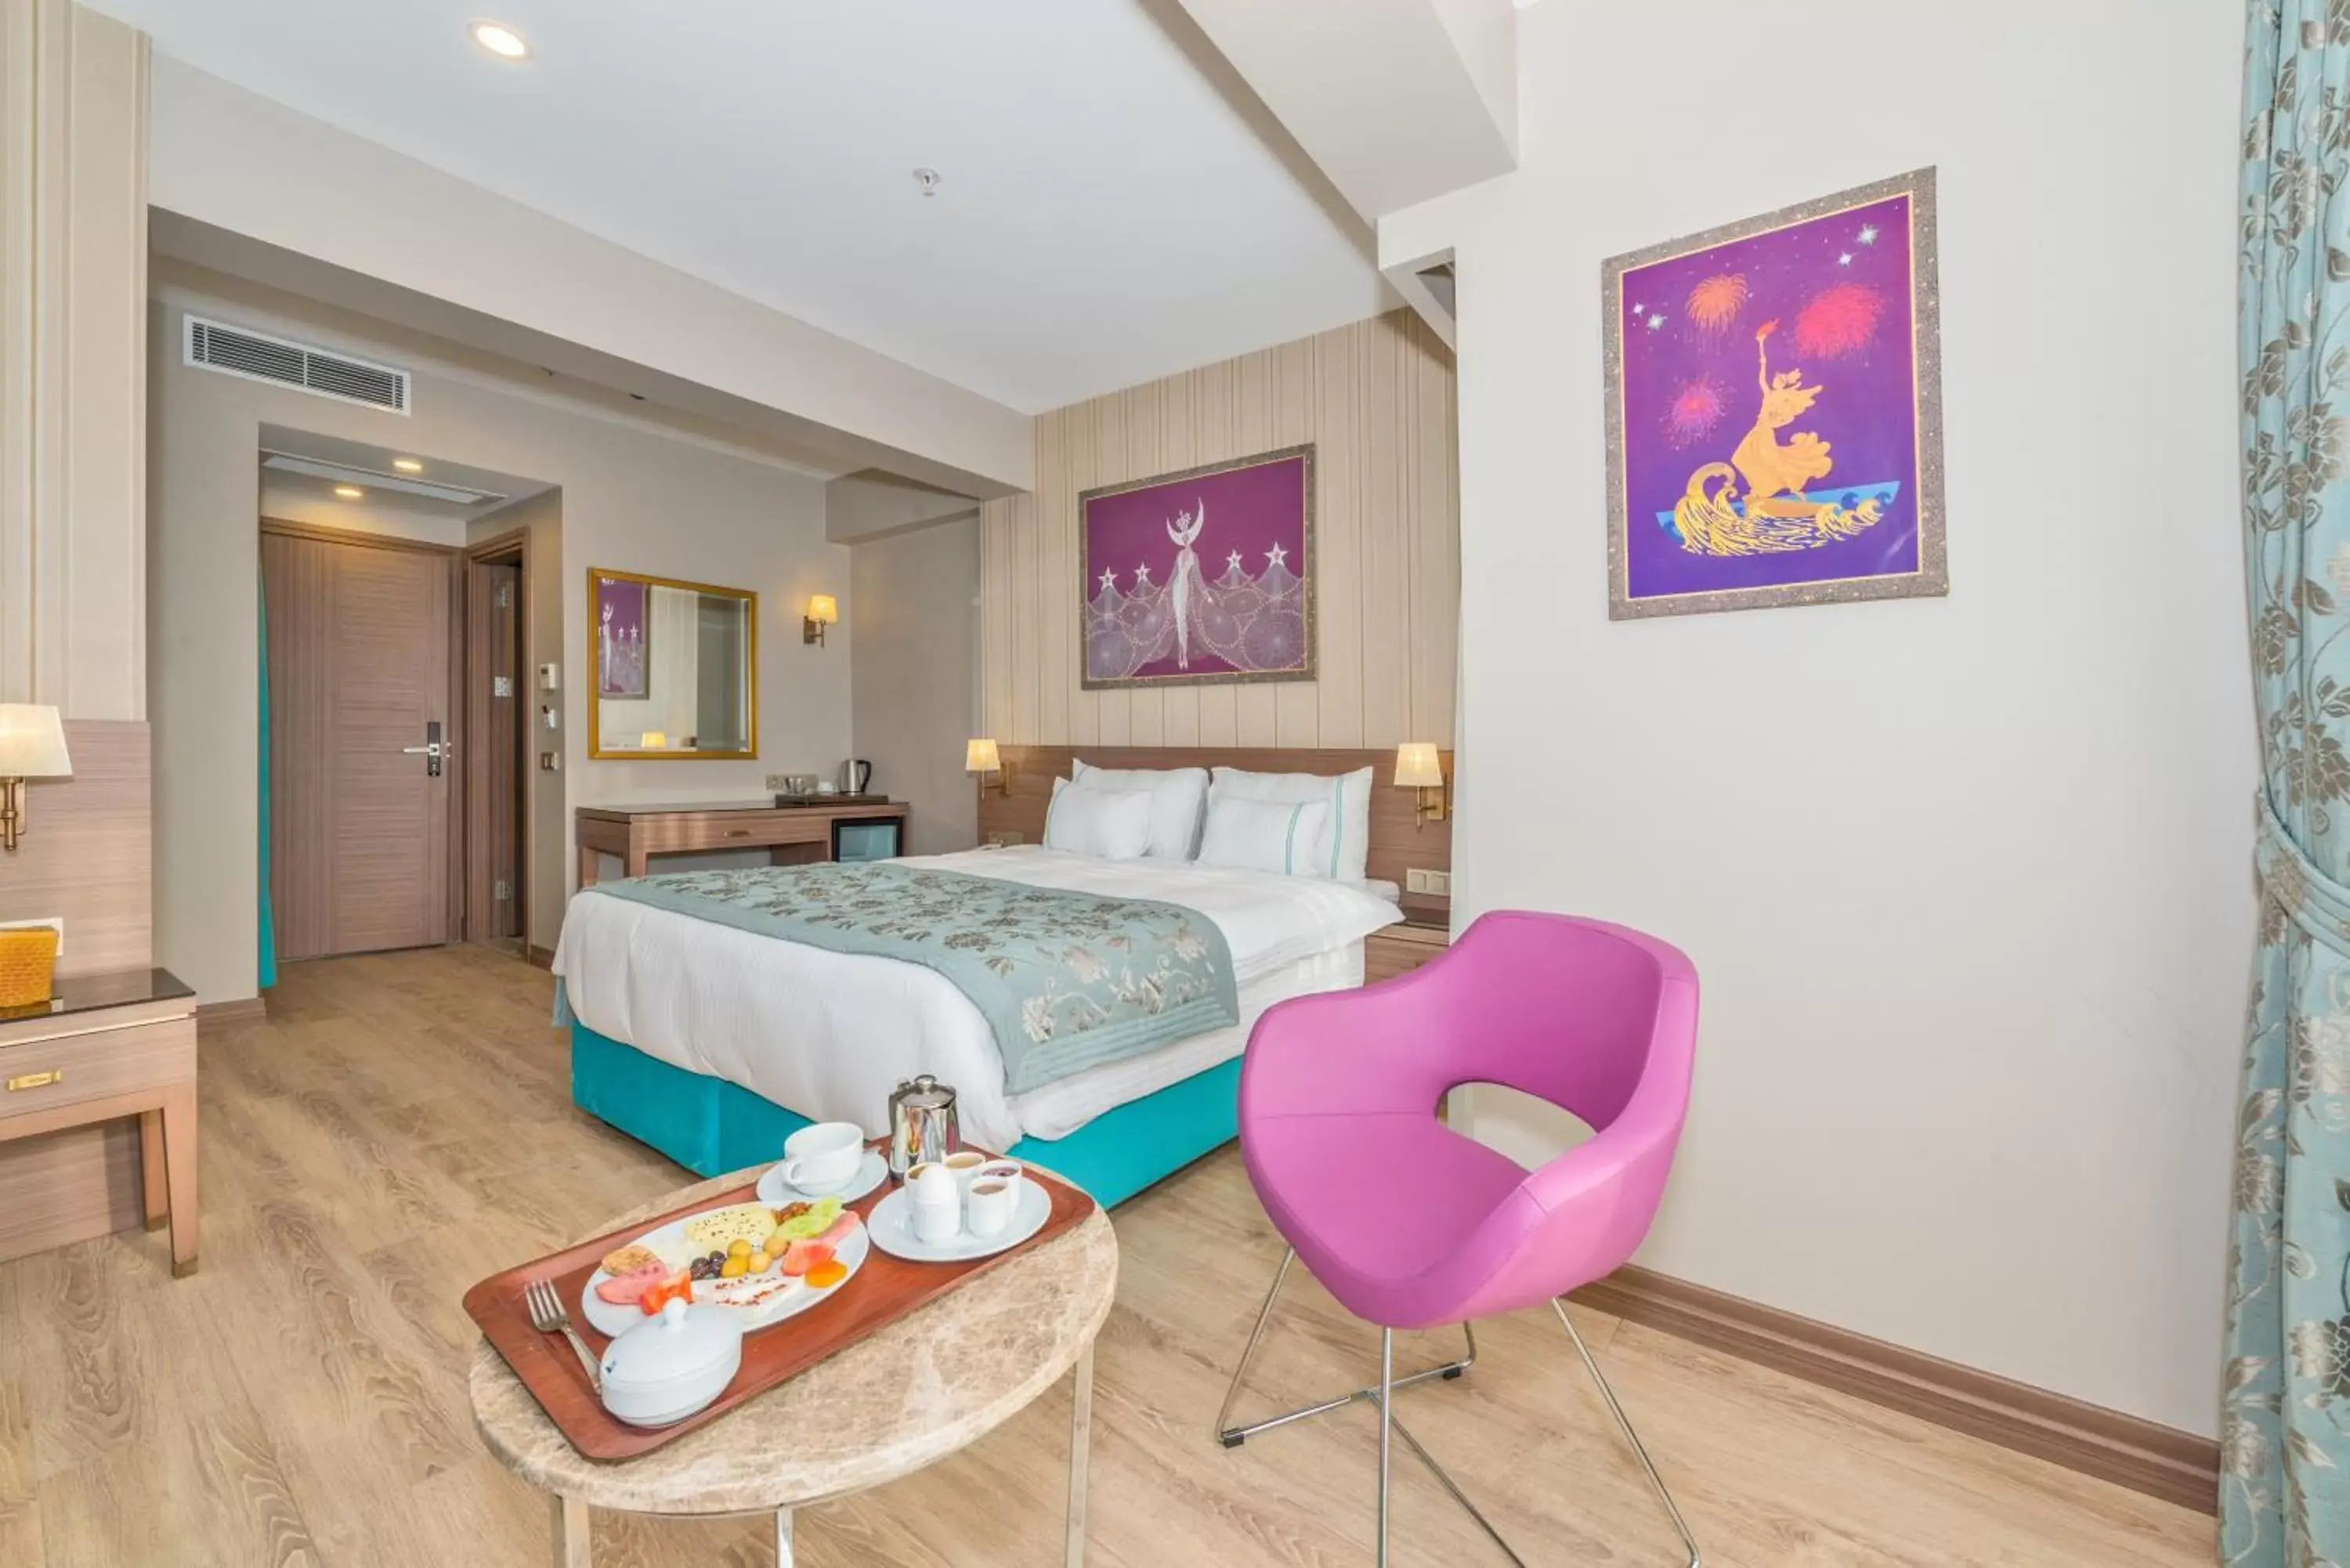 Bedroom in Taximist Hotel